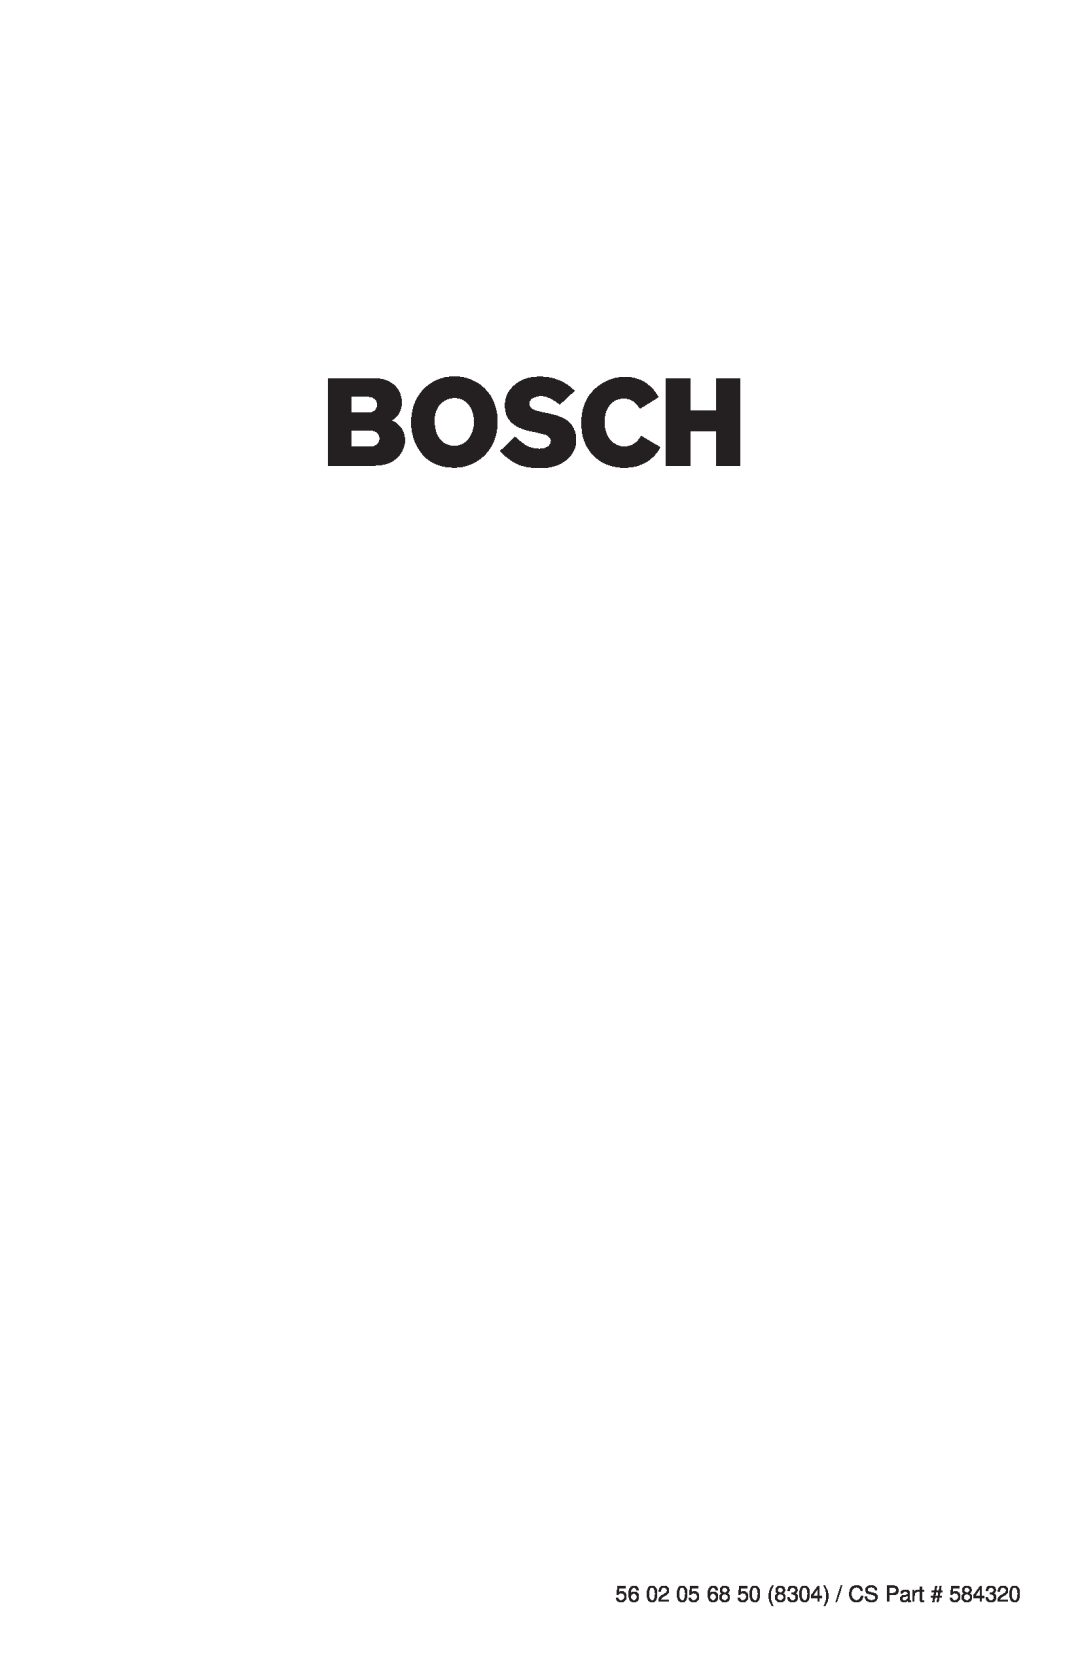 Bosch Appliances SHV99A SHX33A, SHU53E, SHU66E, SHY99A, SHX99B SHY56A installation instructions 56 02 05 68 50 8304 / CS 